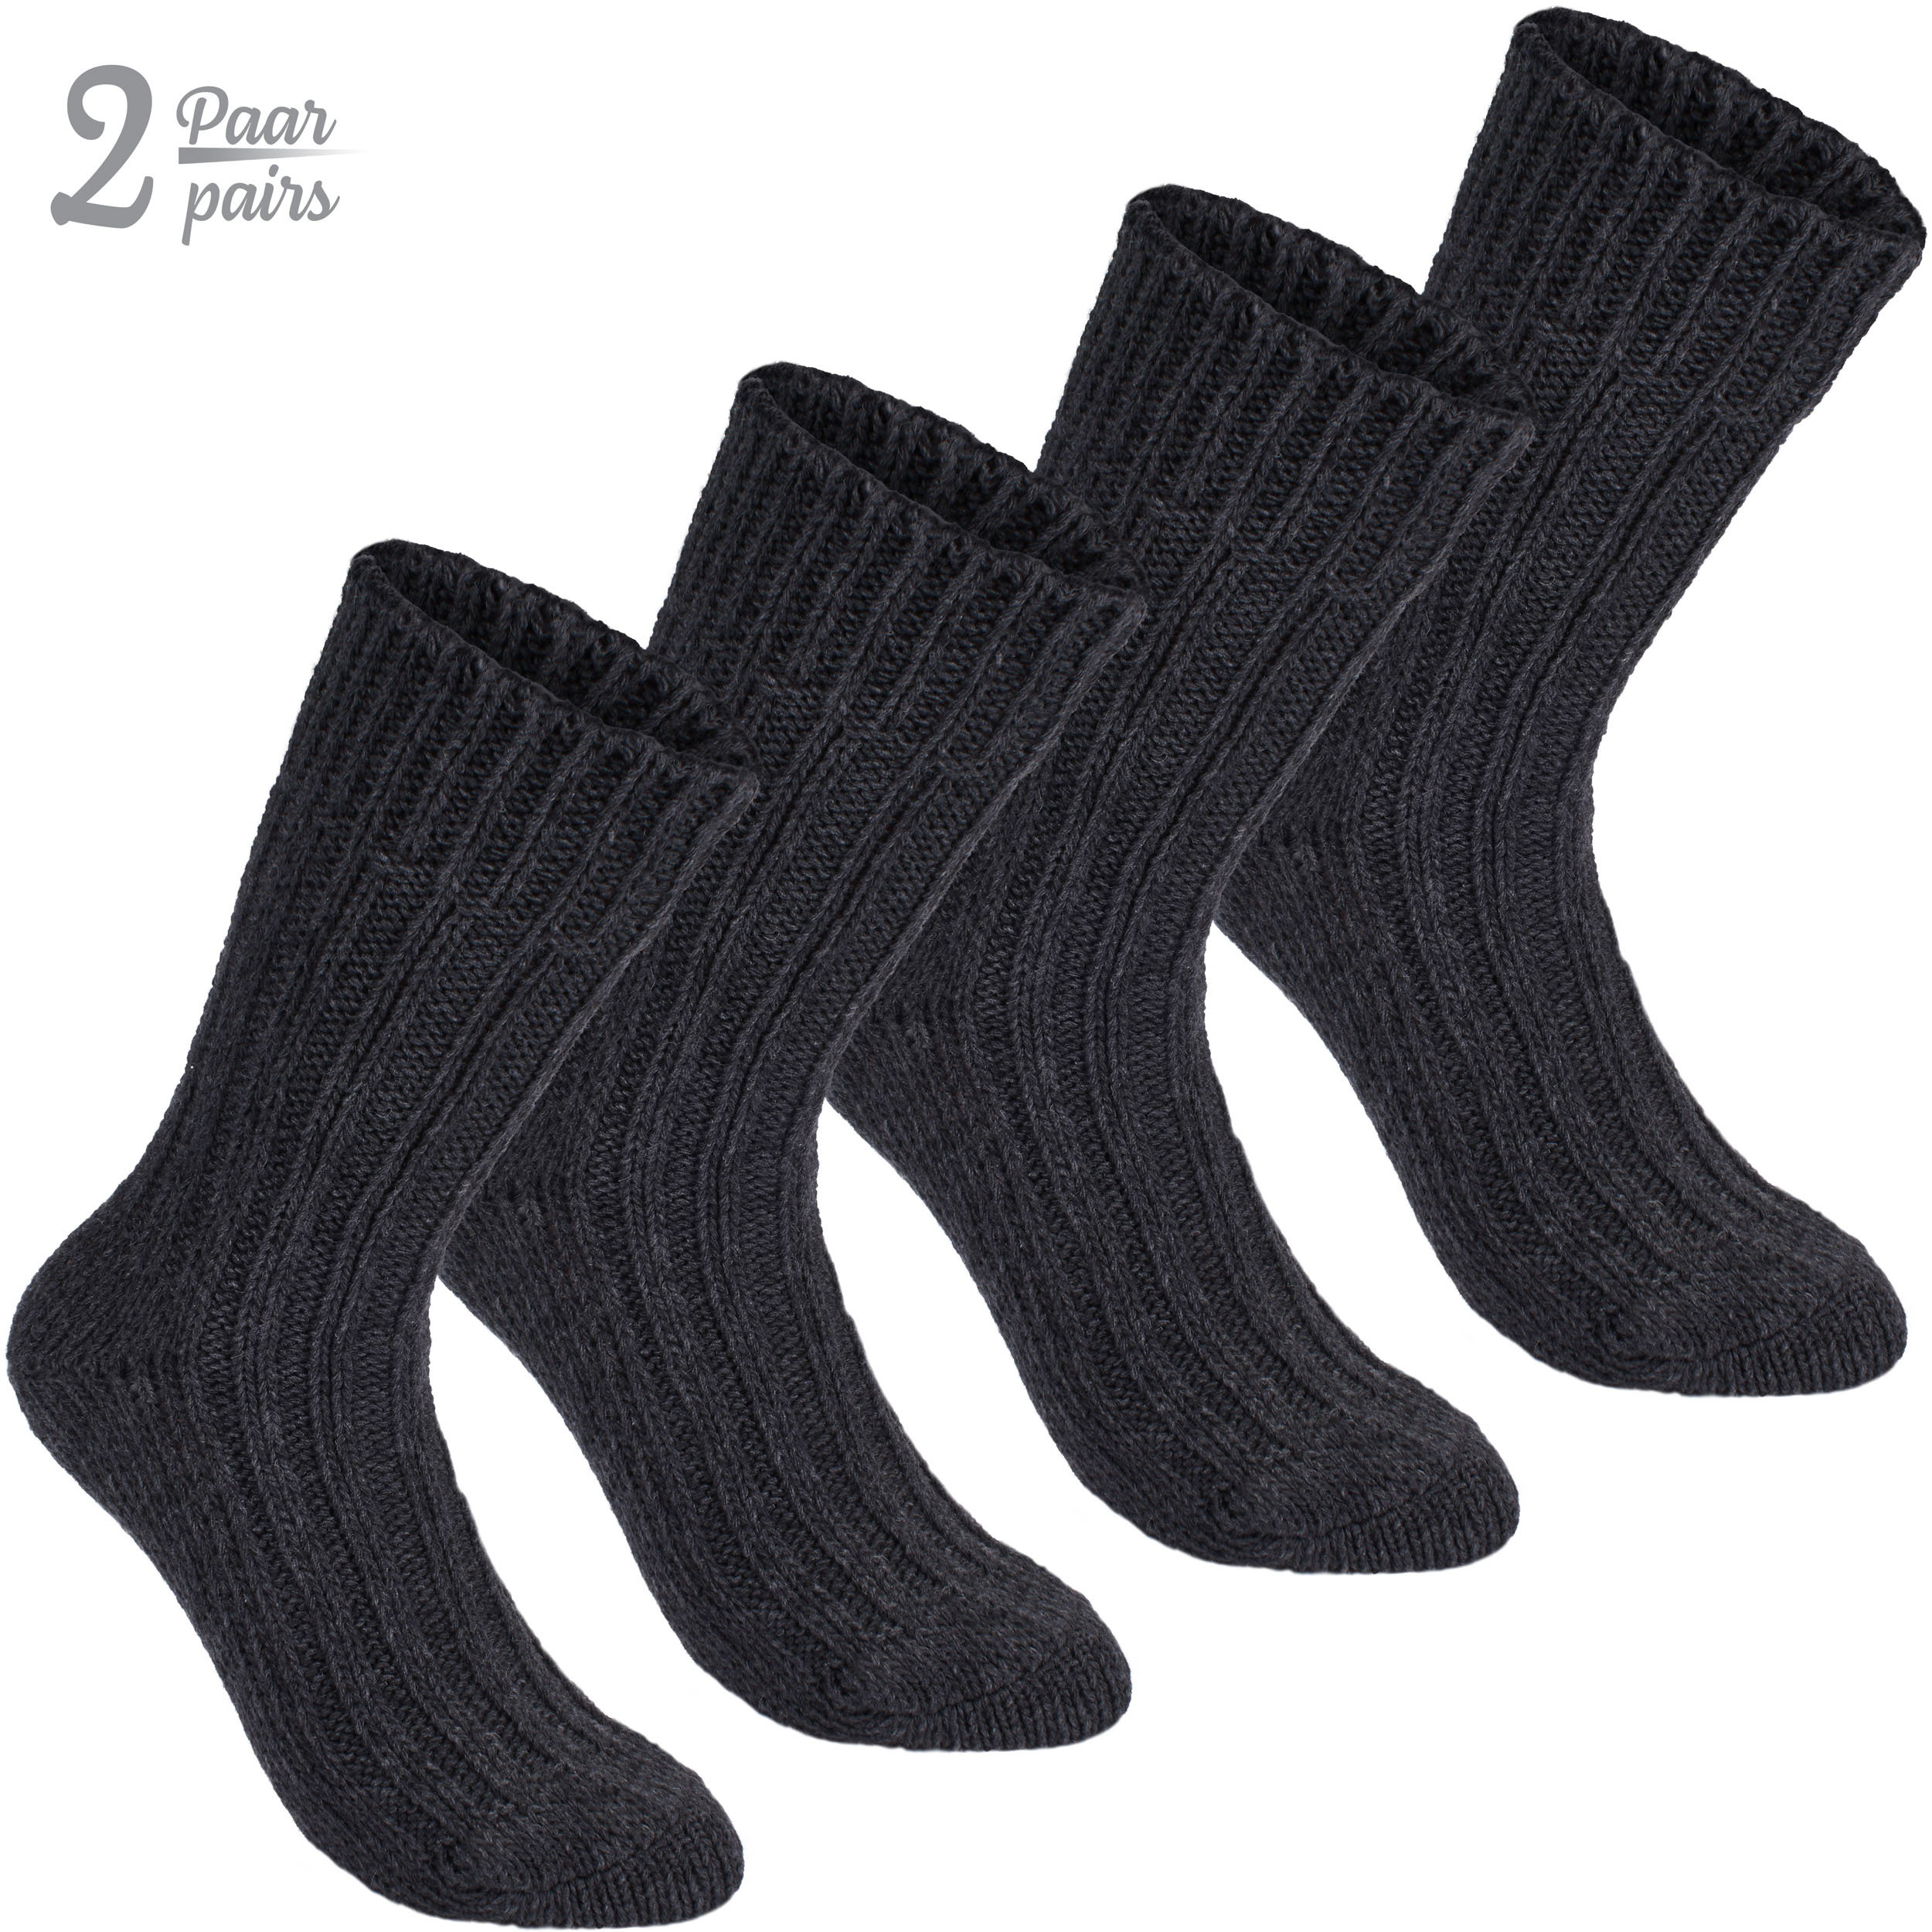 2 Paar Wollsocken Wintersocken Herren Damen Socken mit Schafswolle Stricksocken